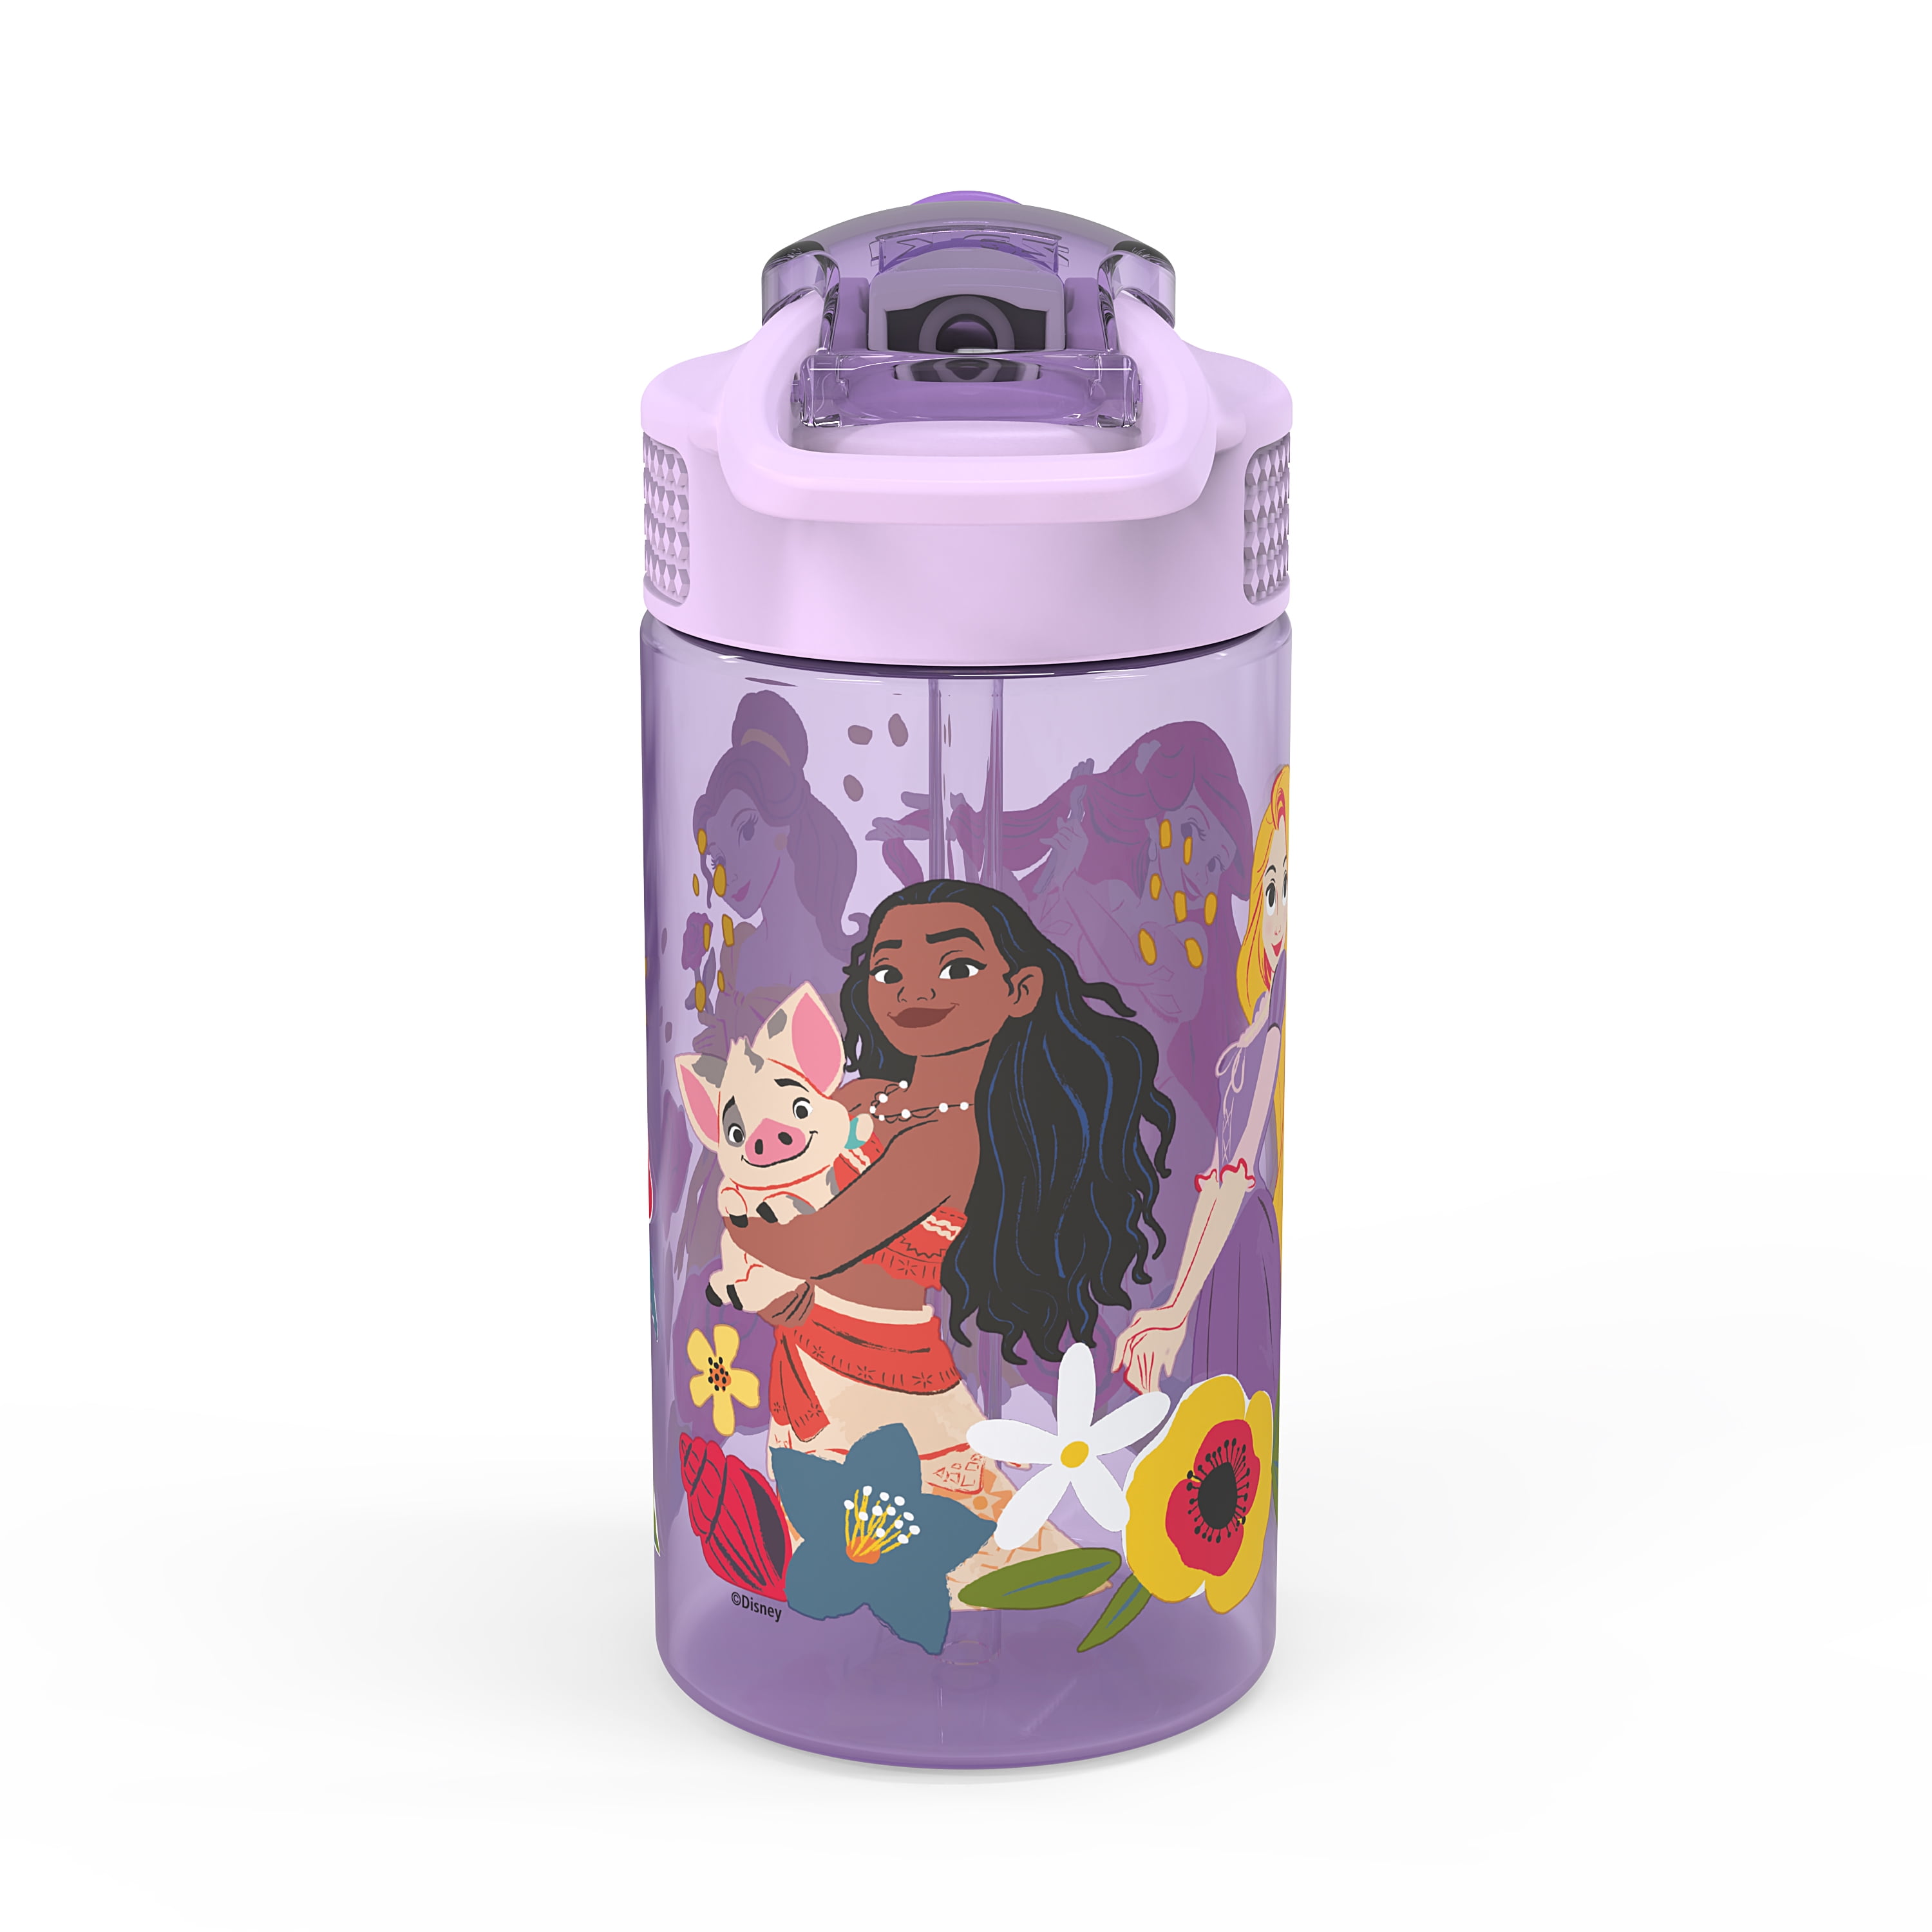 Disney Princess Water Bottle Bundle - 2pc Disney Princess Cup Set with 2  16.5 Ounce Sullivan Water B…See more Disney Princess Water Bottle Bundle 